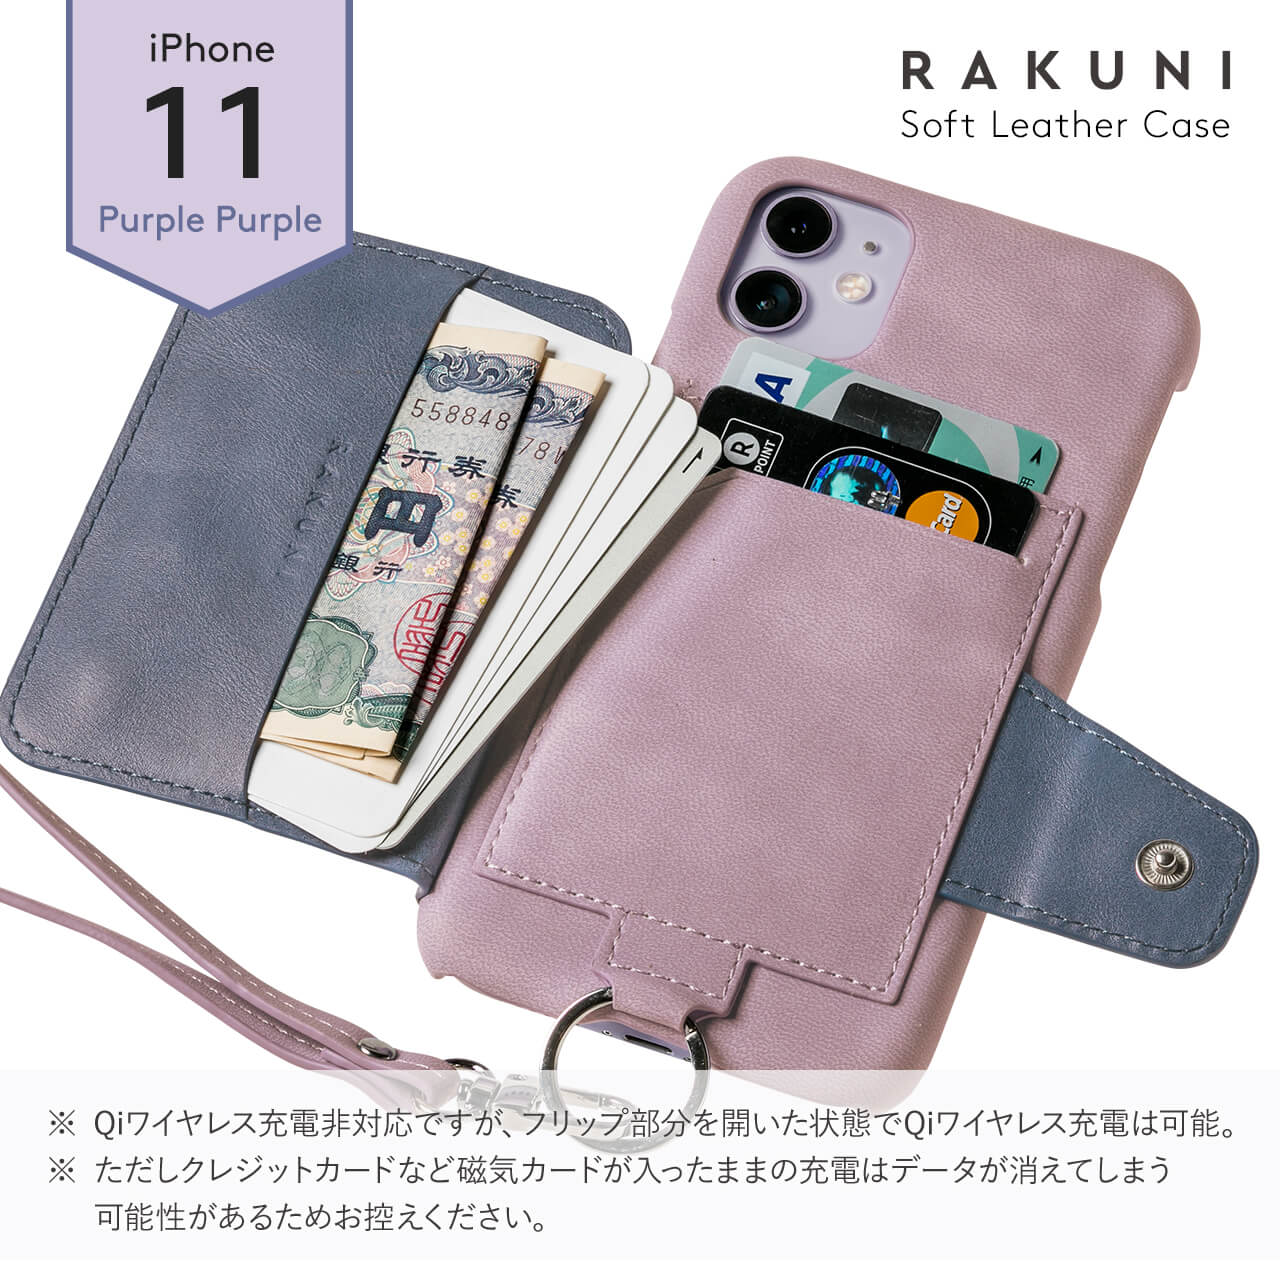 Iphone11 Xr 便利 財布 背面手帳 スマホケース カバー パープル ソフトレザー Rakuni ラクニ